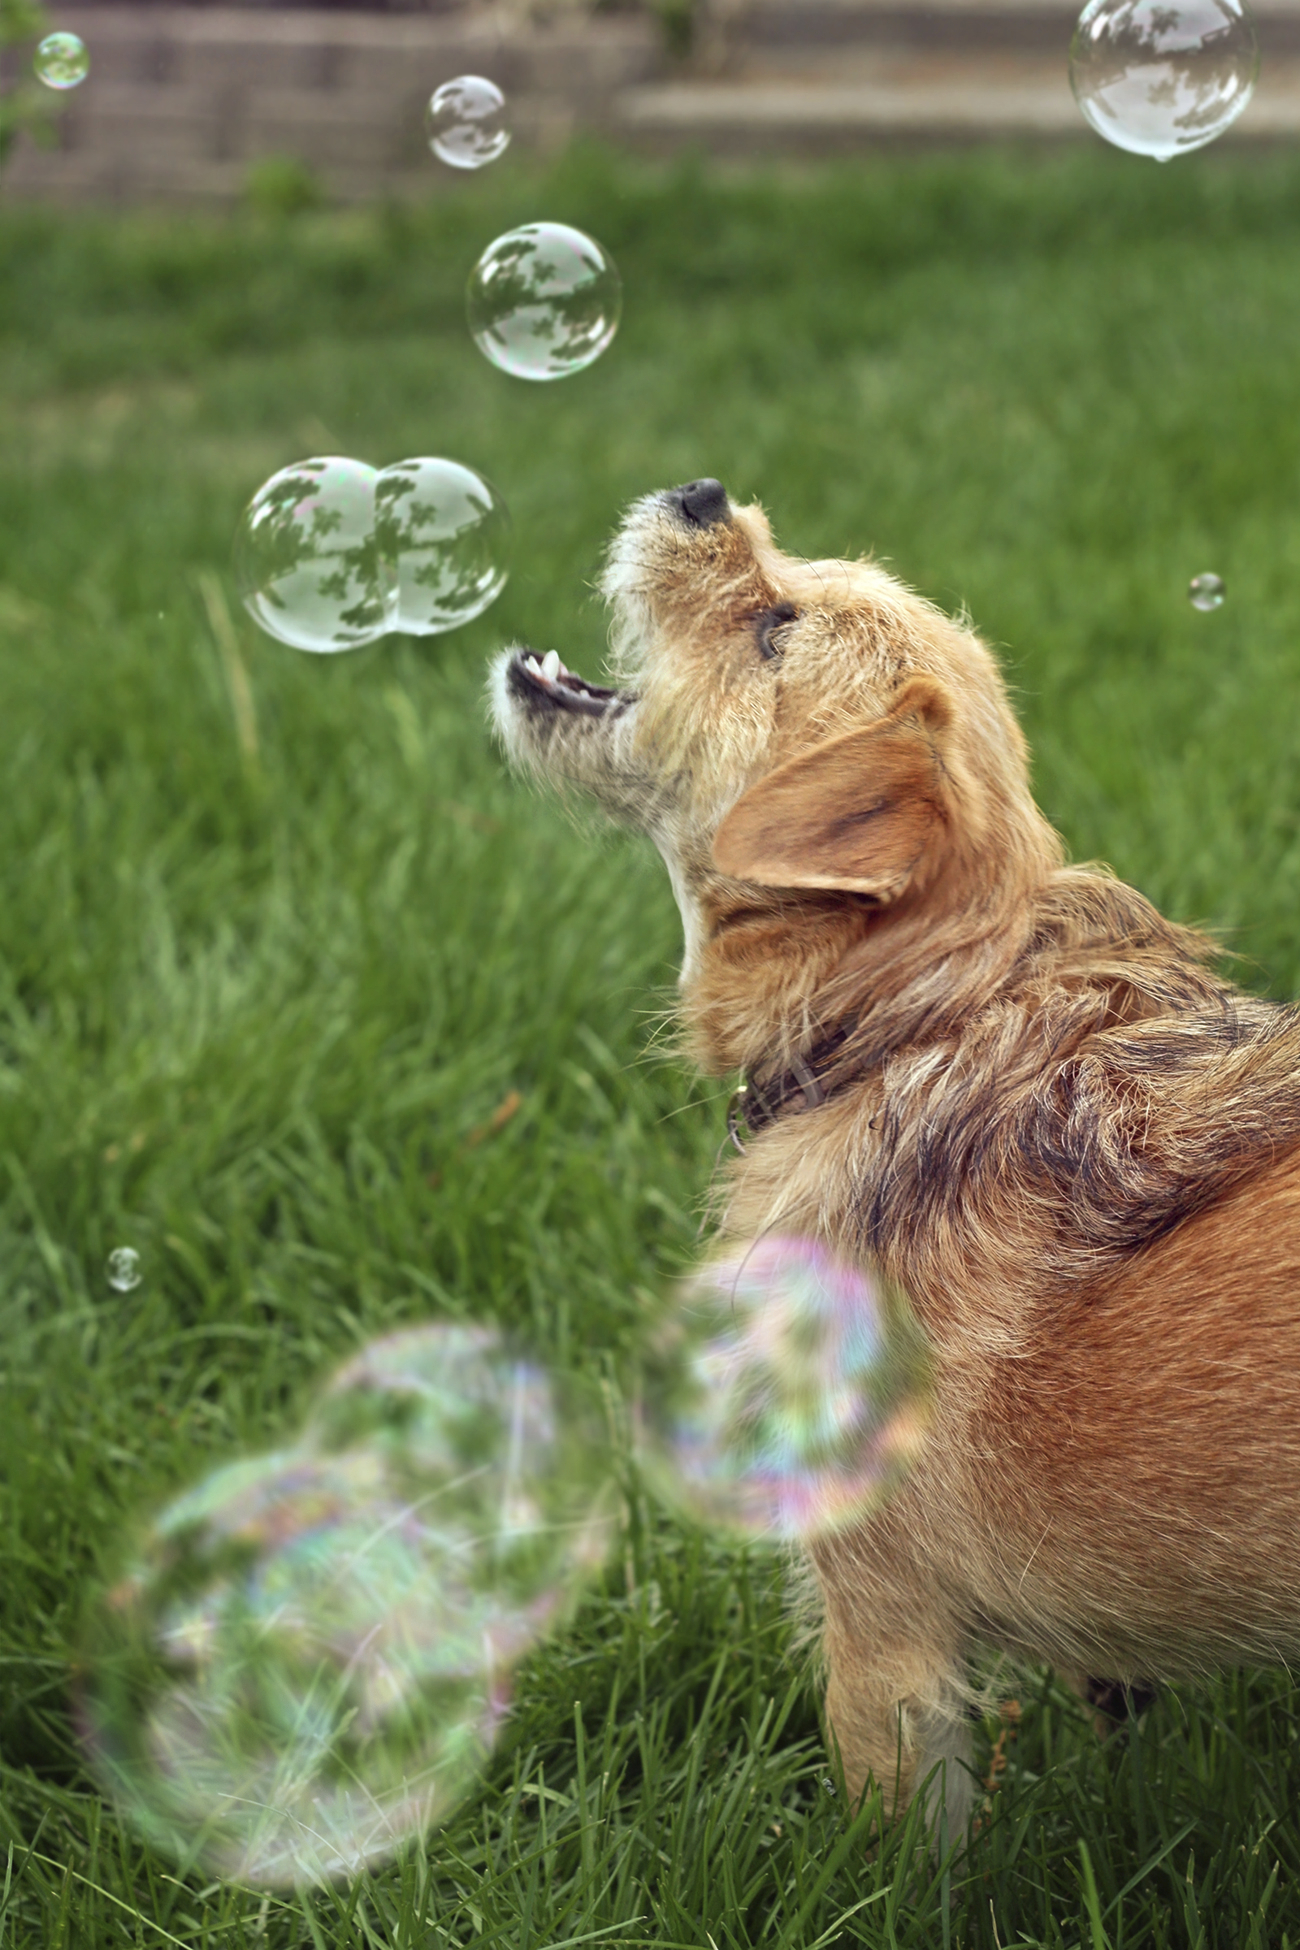 https://waggingtailspetresort.com/wp-content/uploads/2015/07/dog-bubbles.jpg